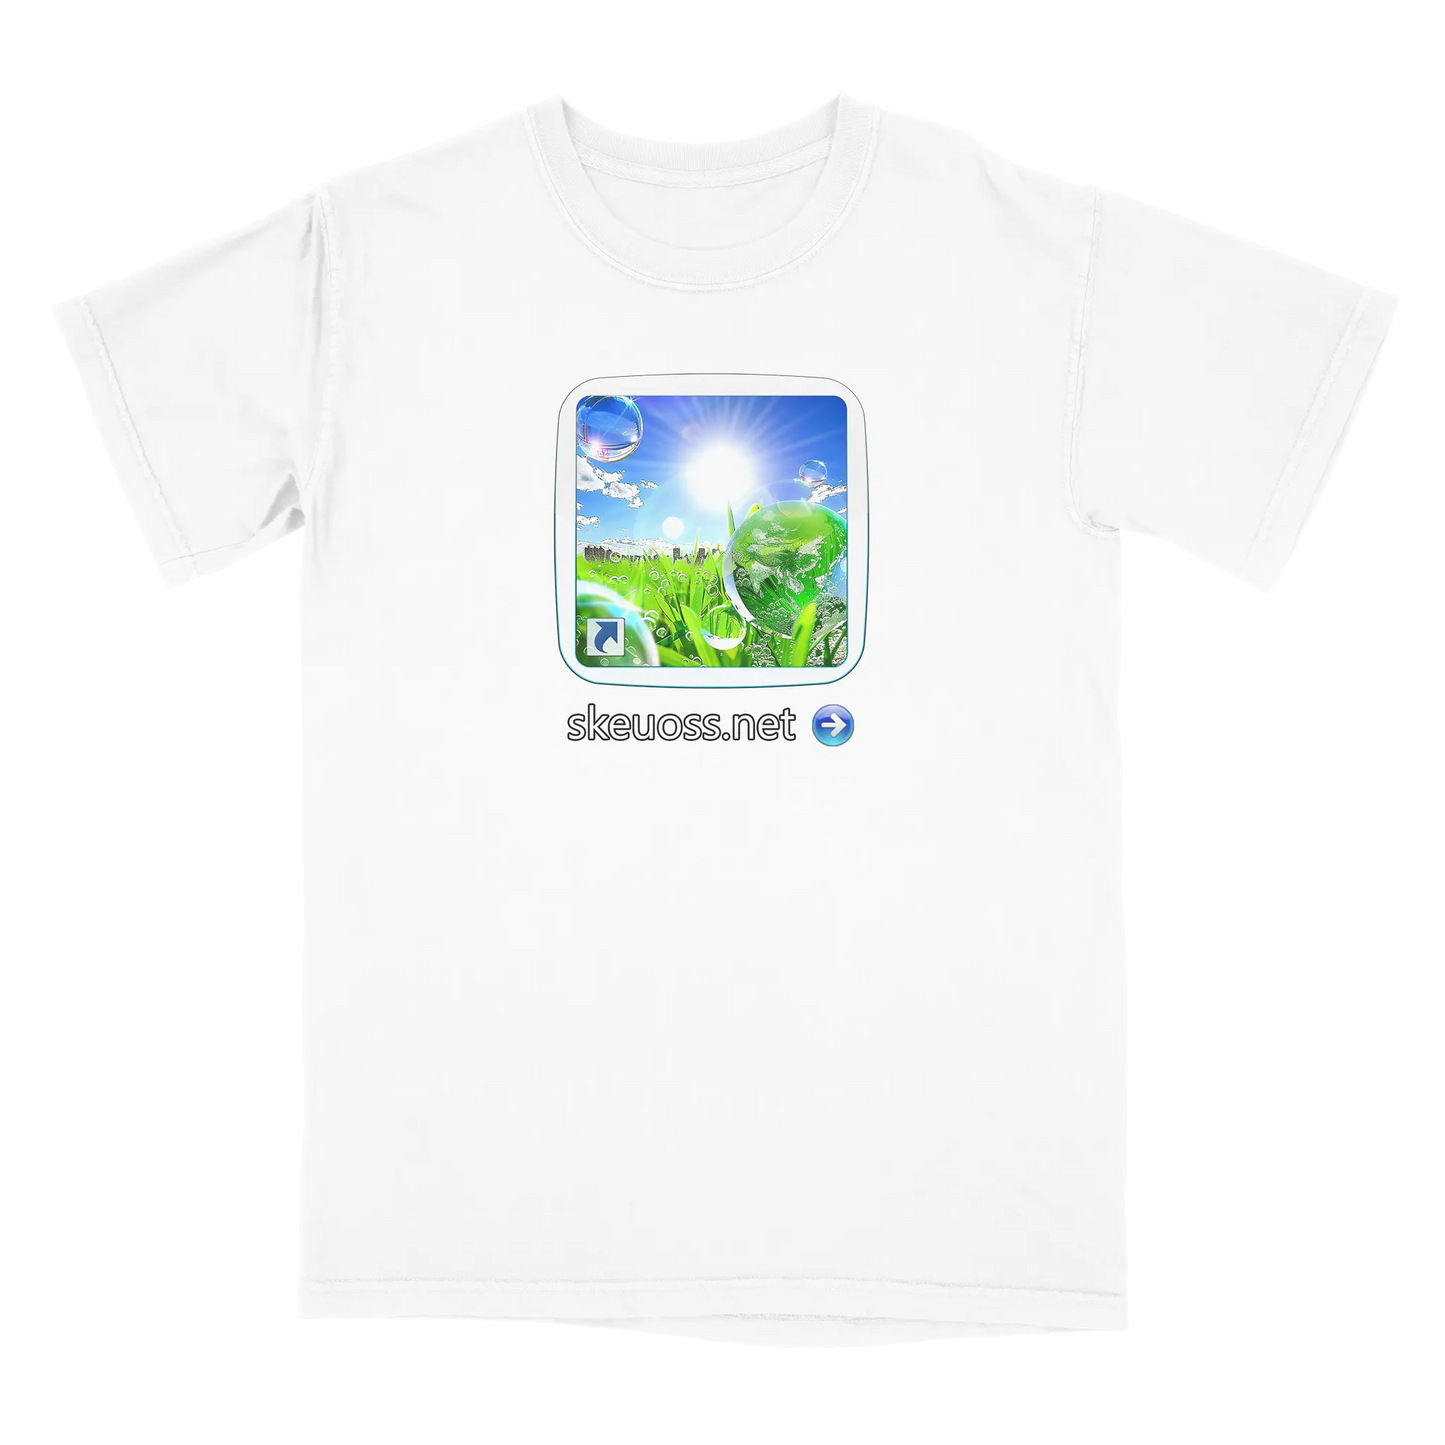 Frutiger Aero T-shirt - User Login Collection - User 263